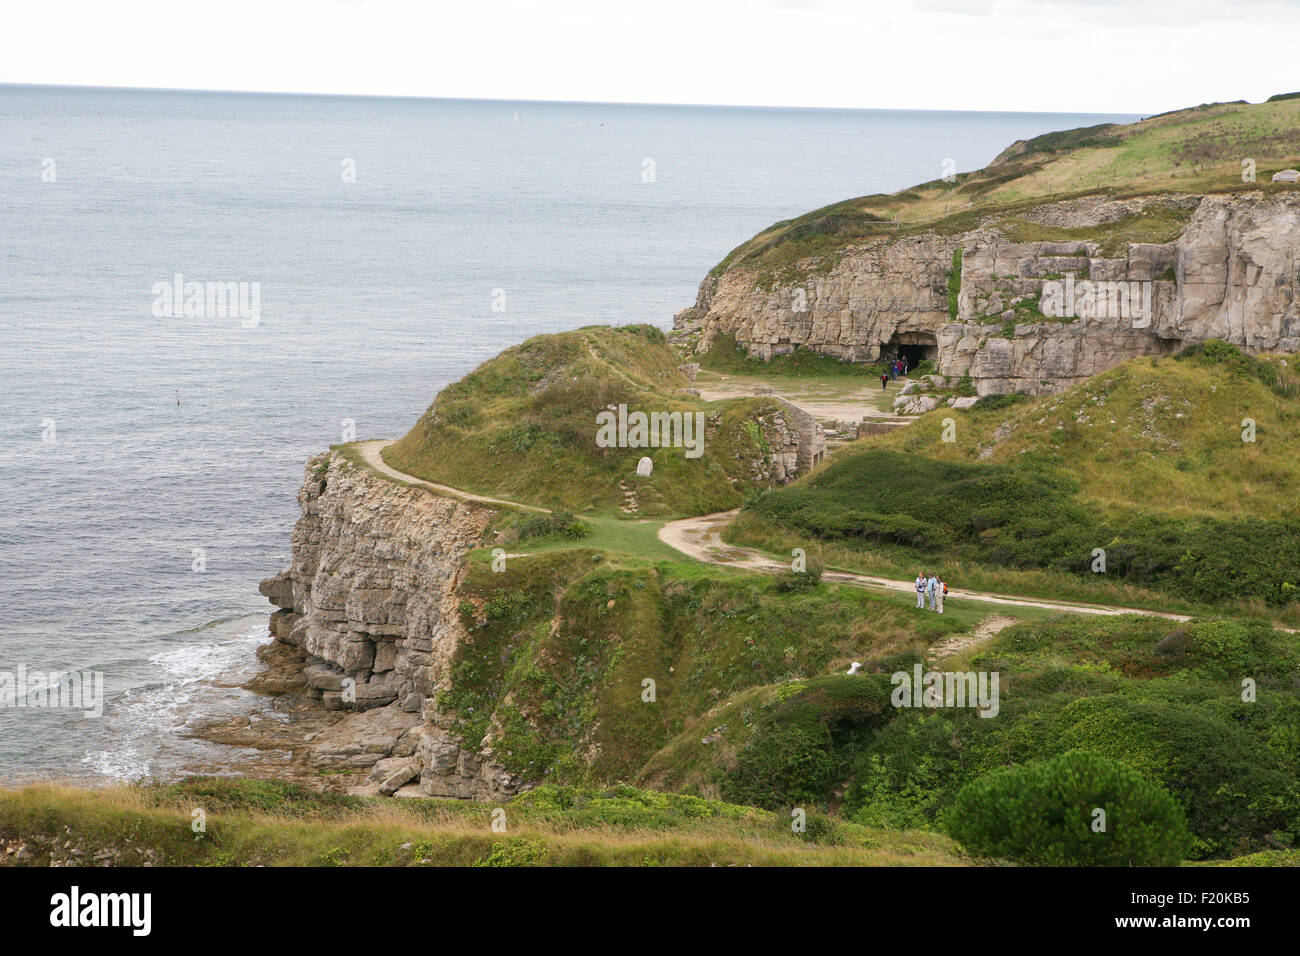 L'île de la côte jurassique du Dorset Purbeck Banque D'Images